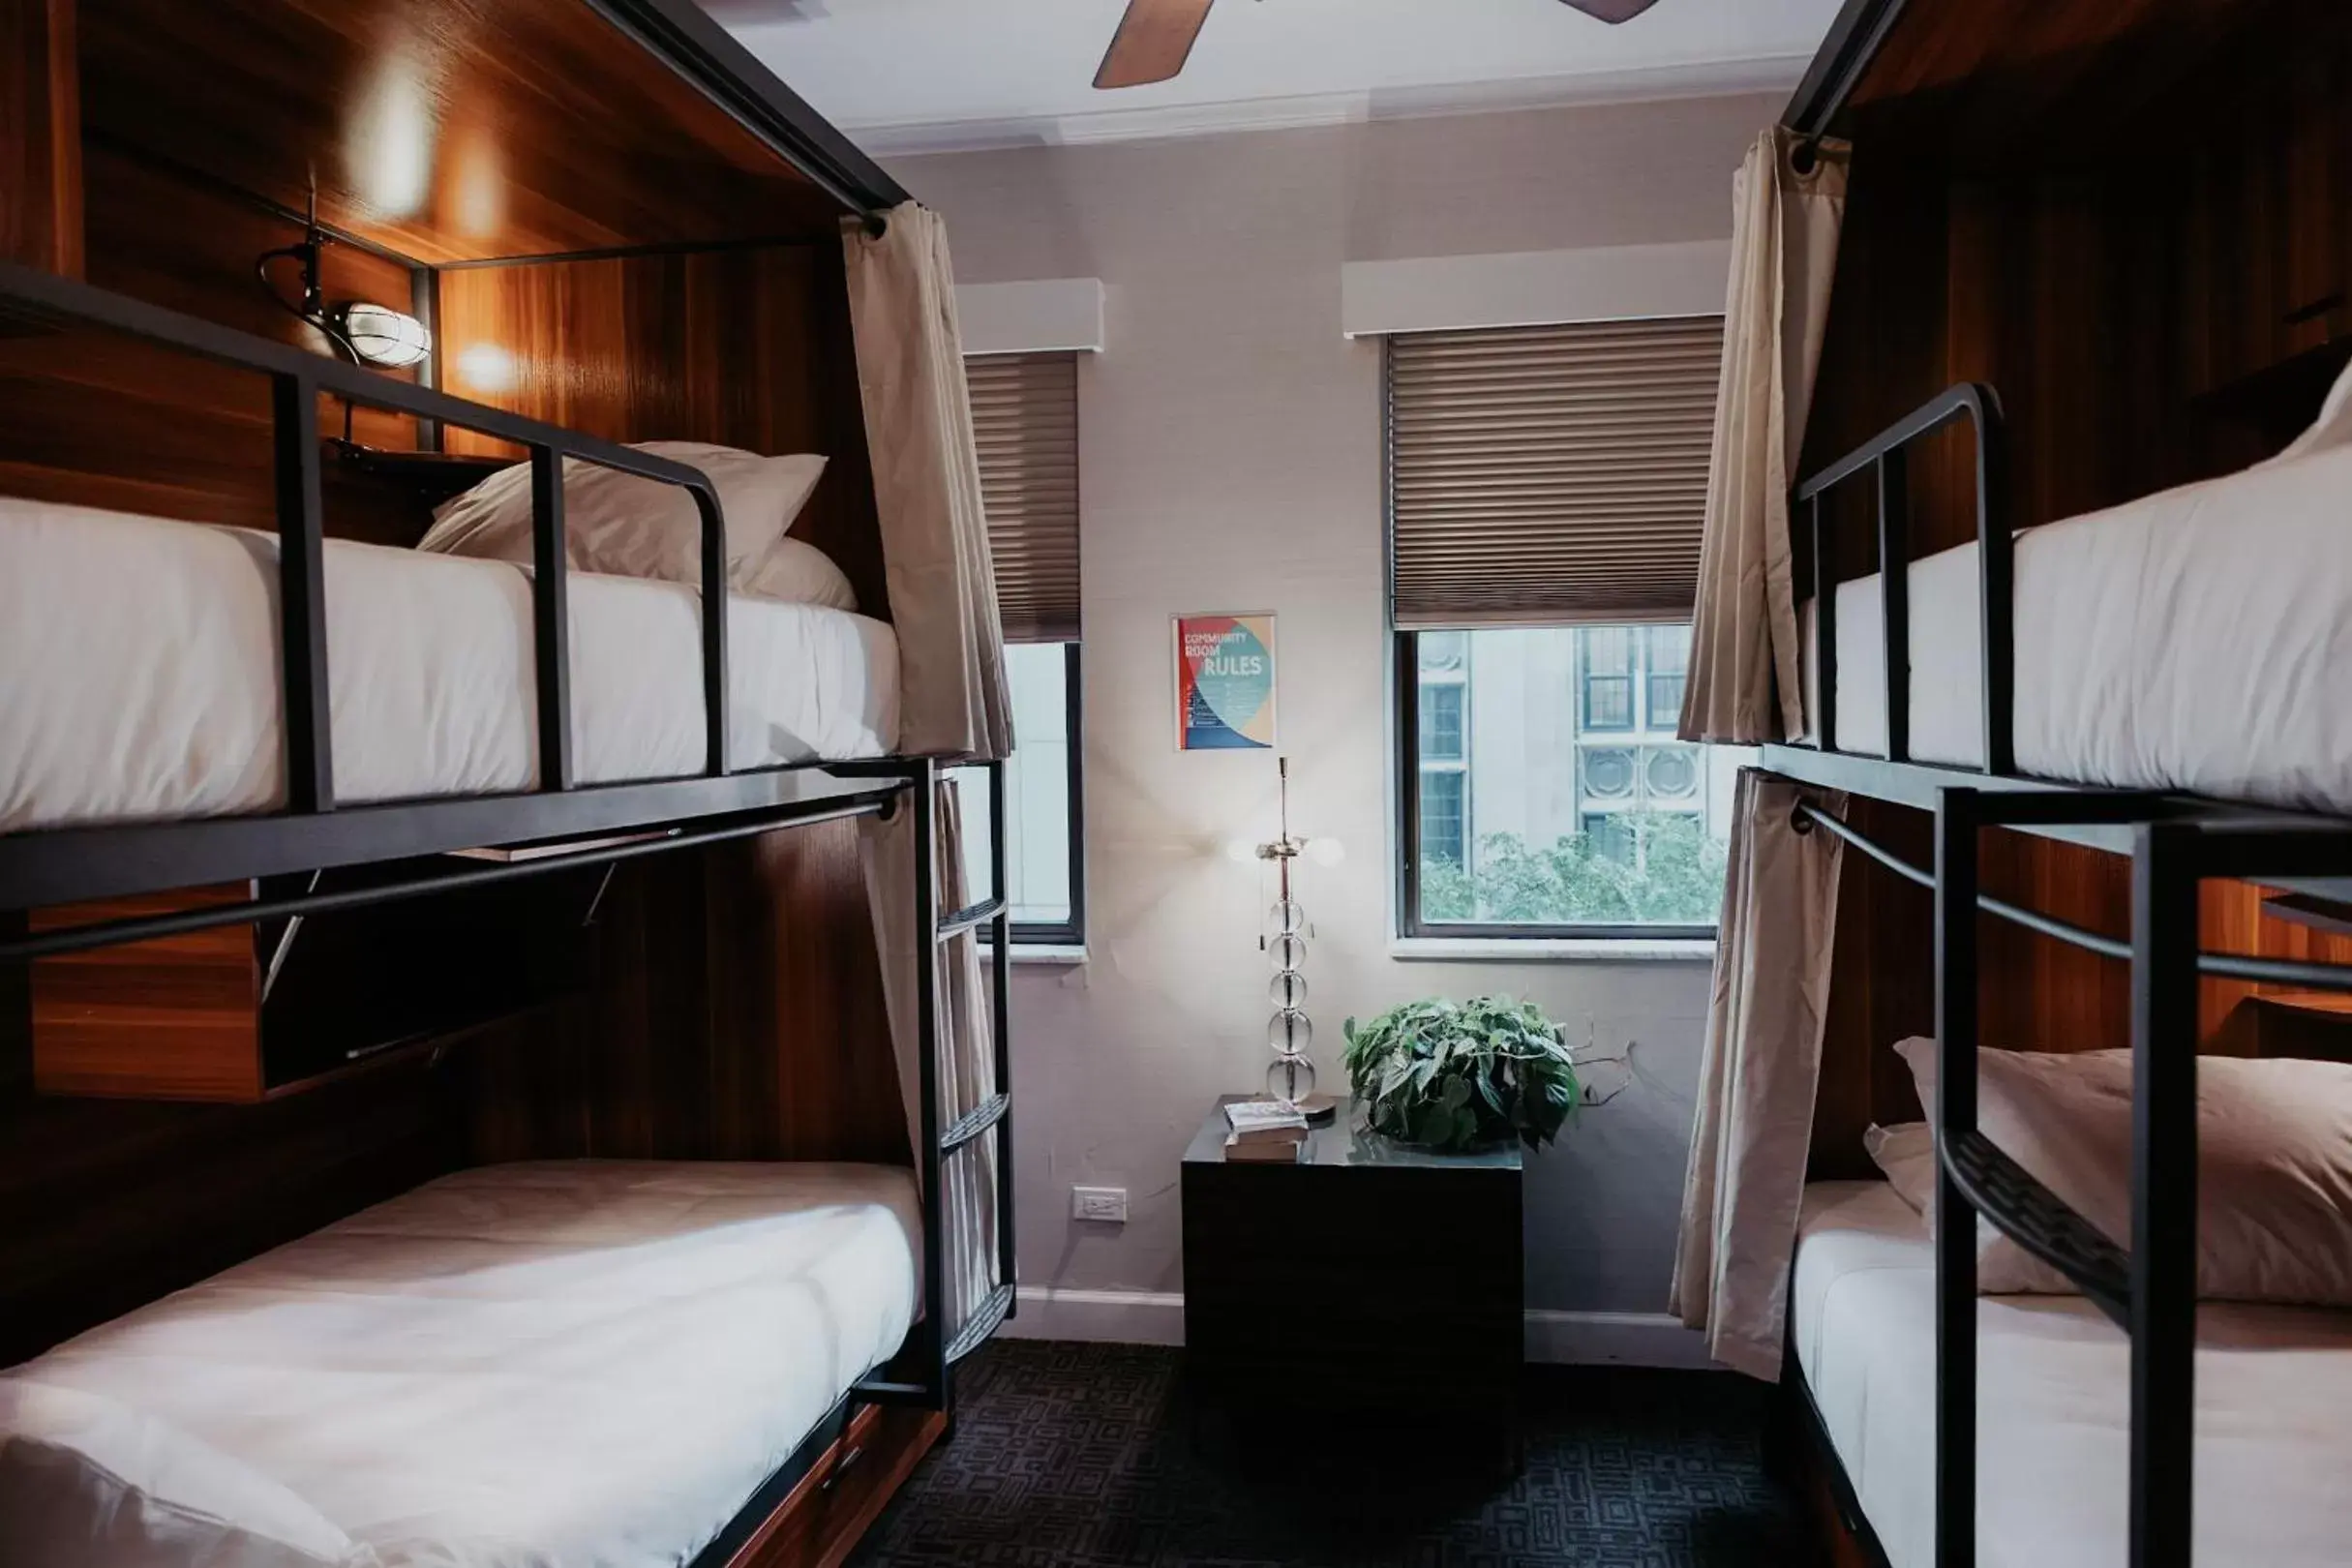 Bedroom, Bunk Bed in Selina Chicago